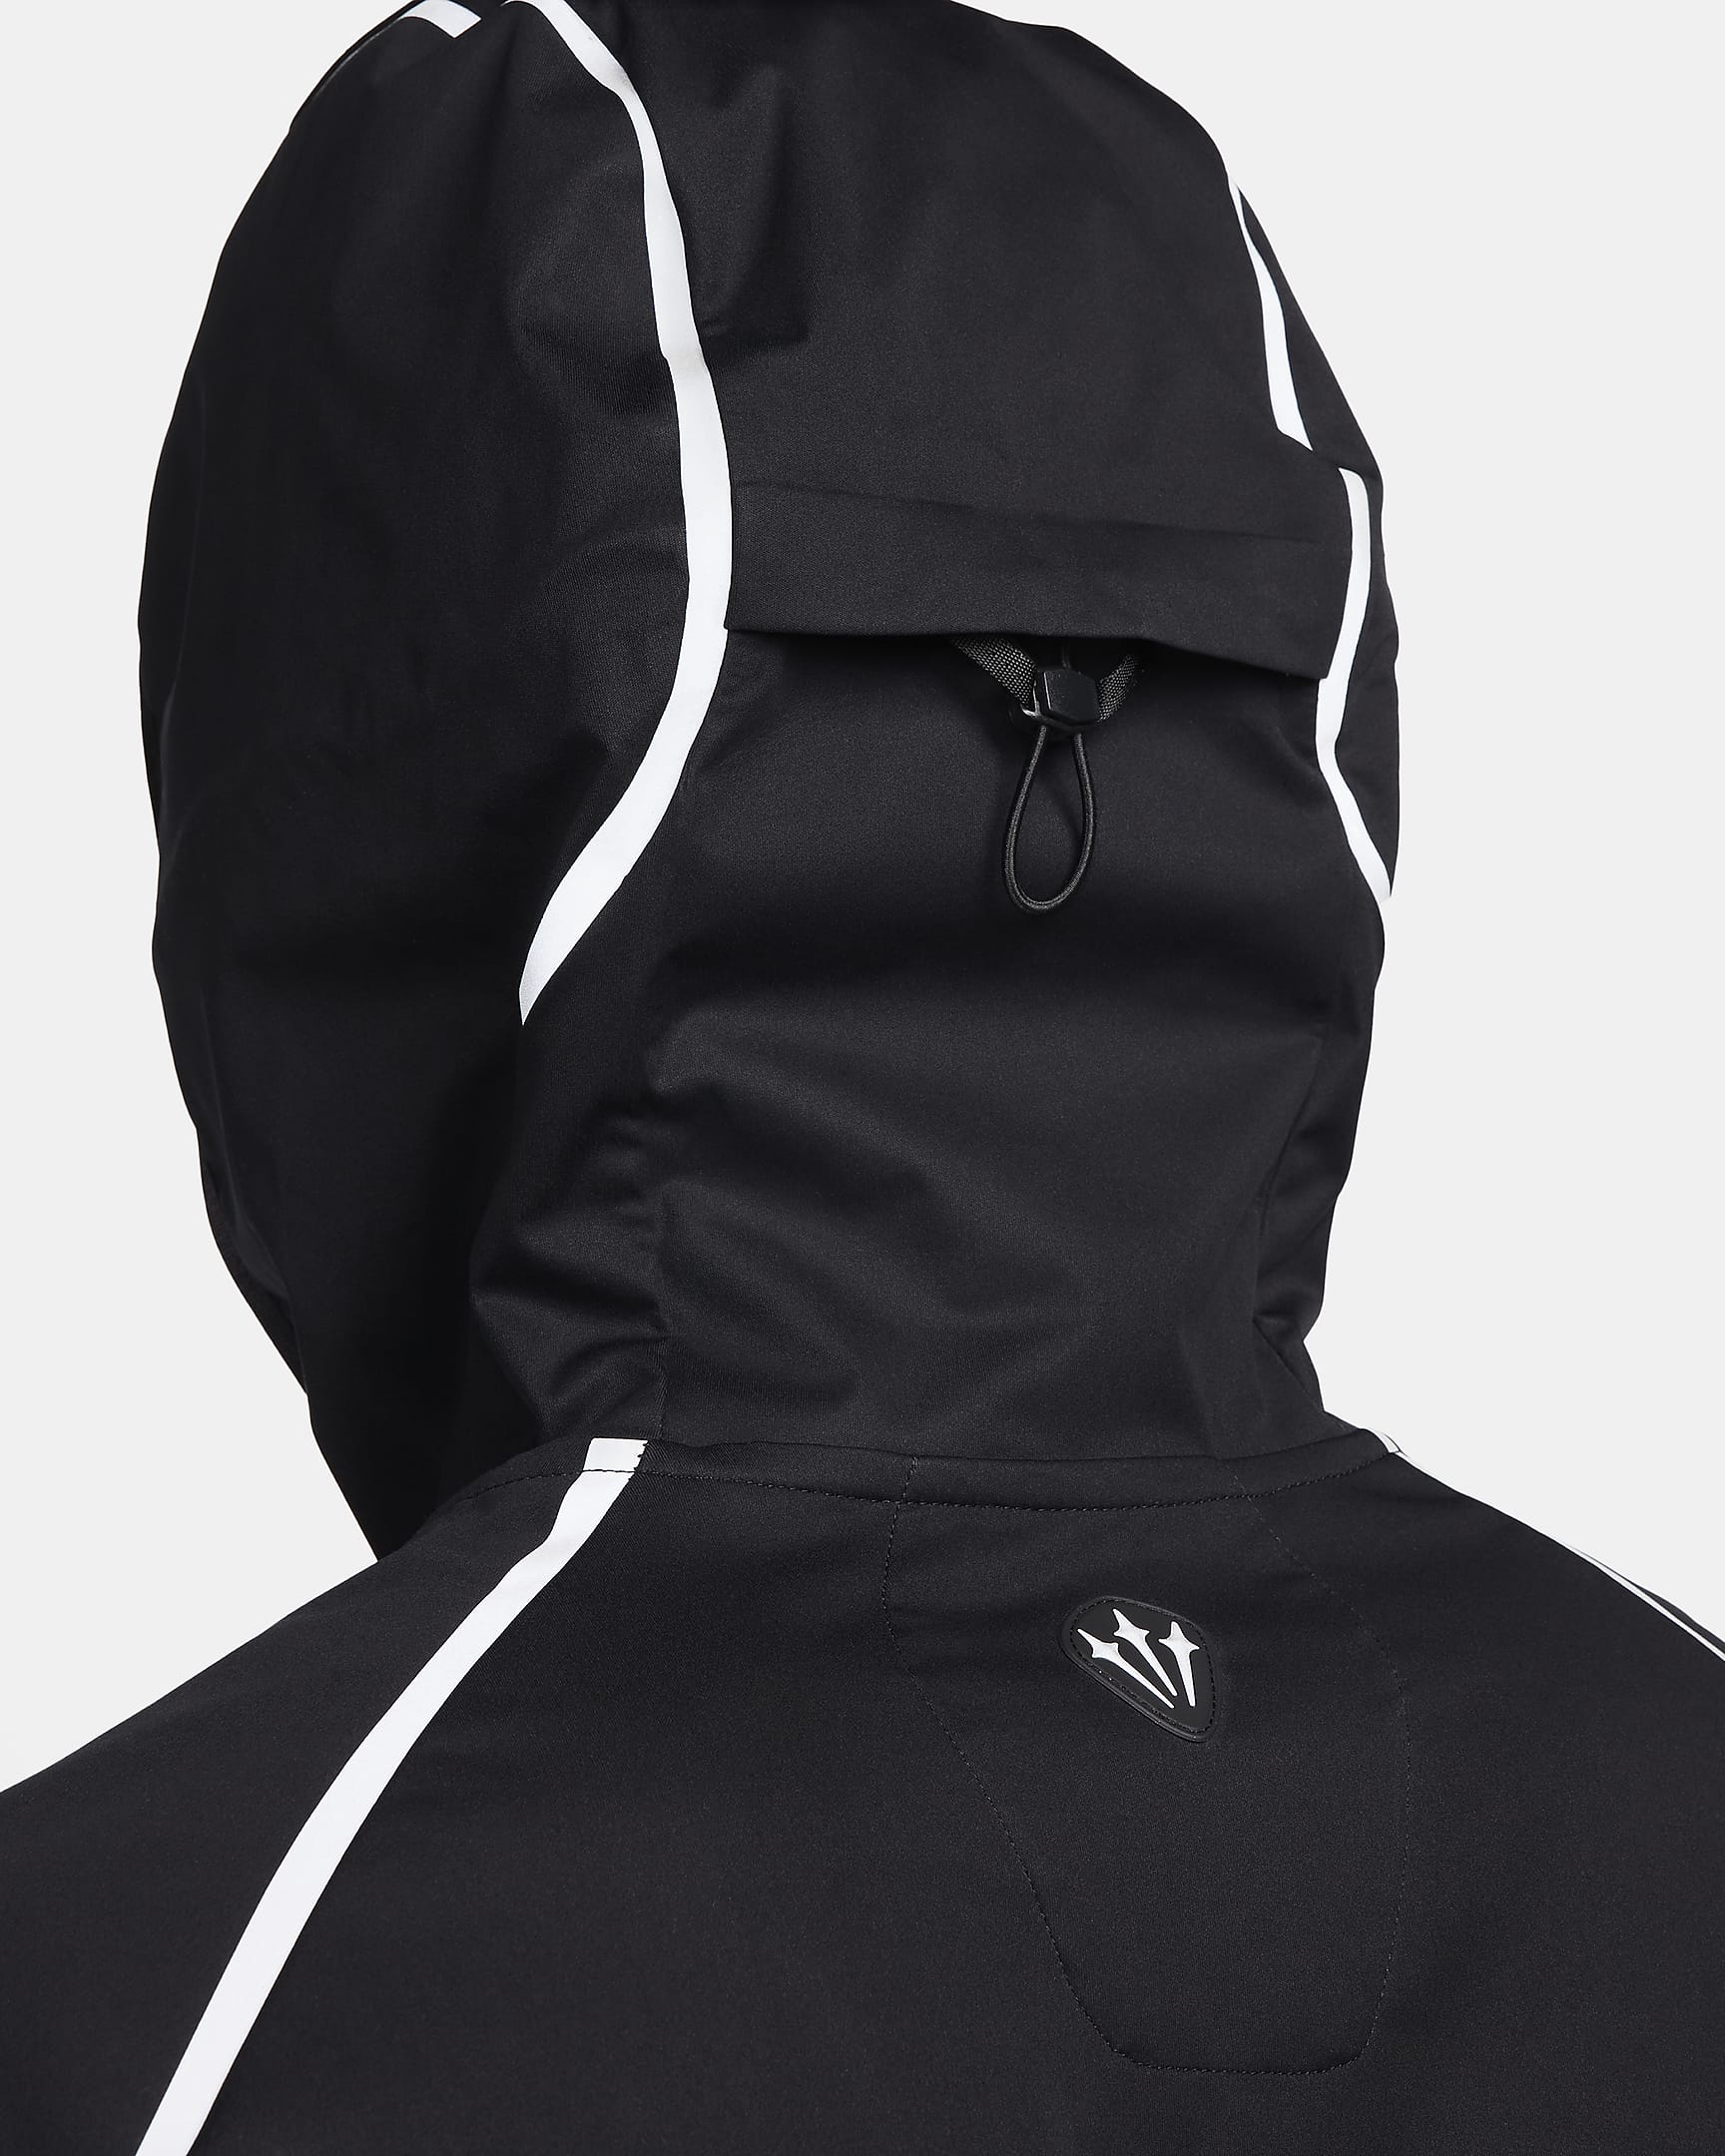 NOCTA Men's Warm-Up Jacket - Black